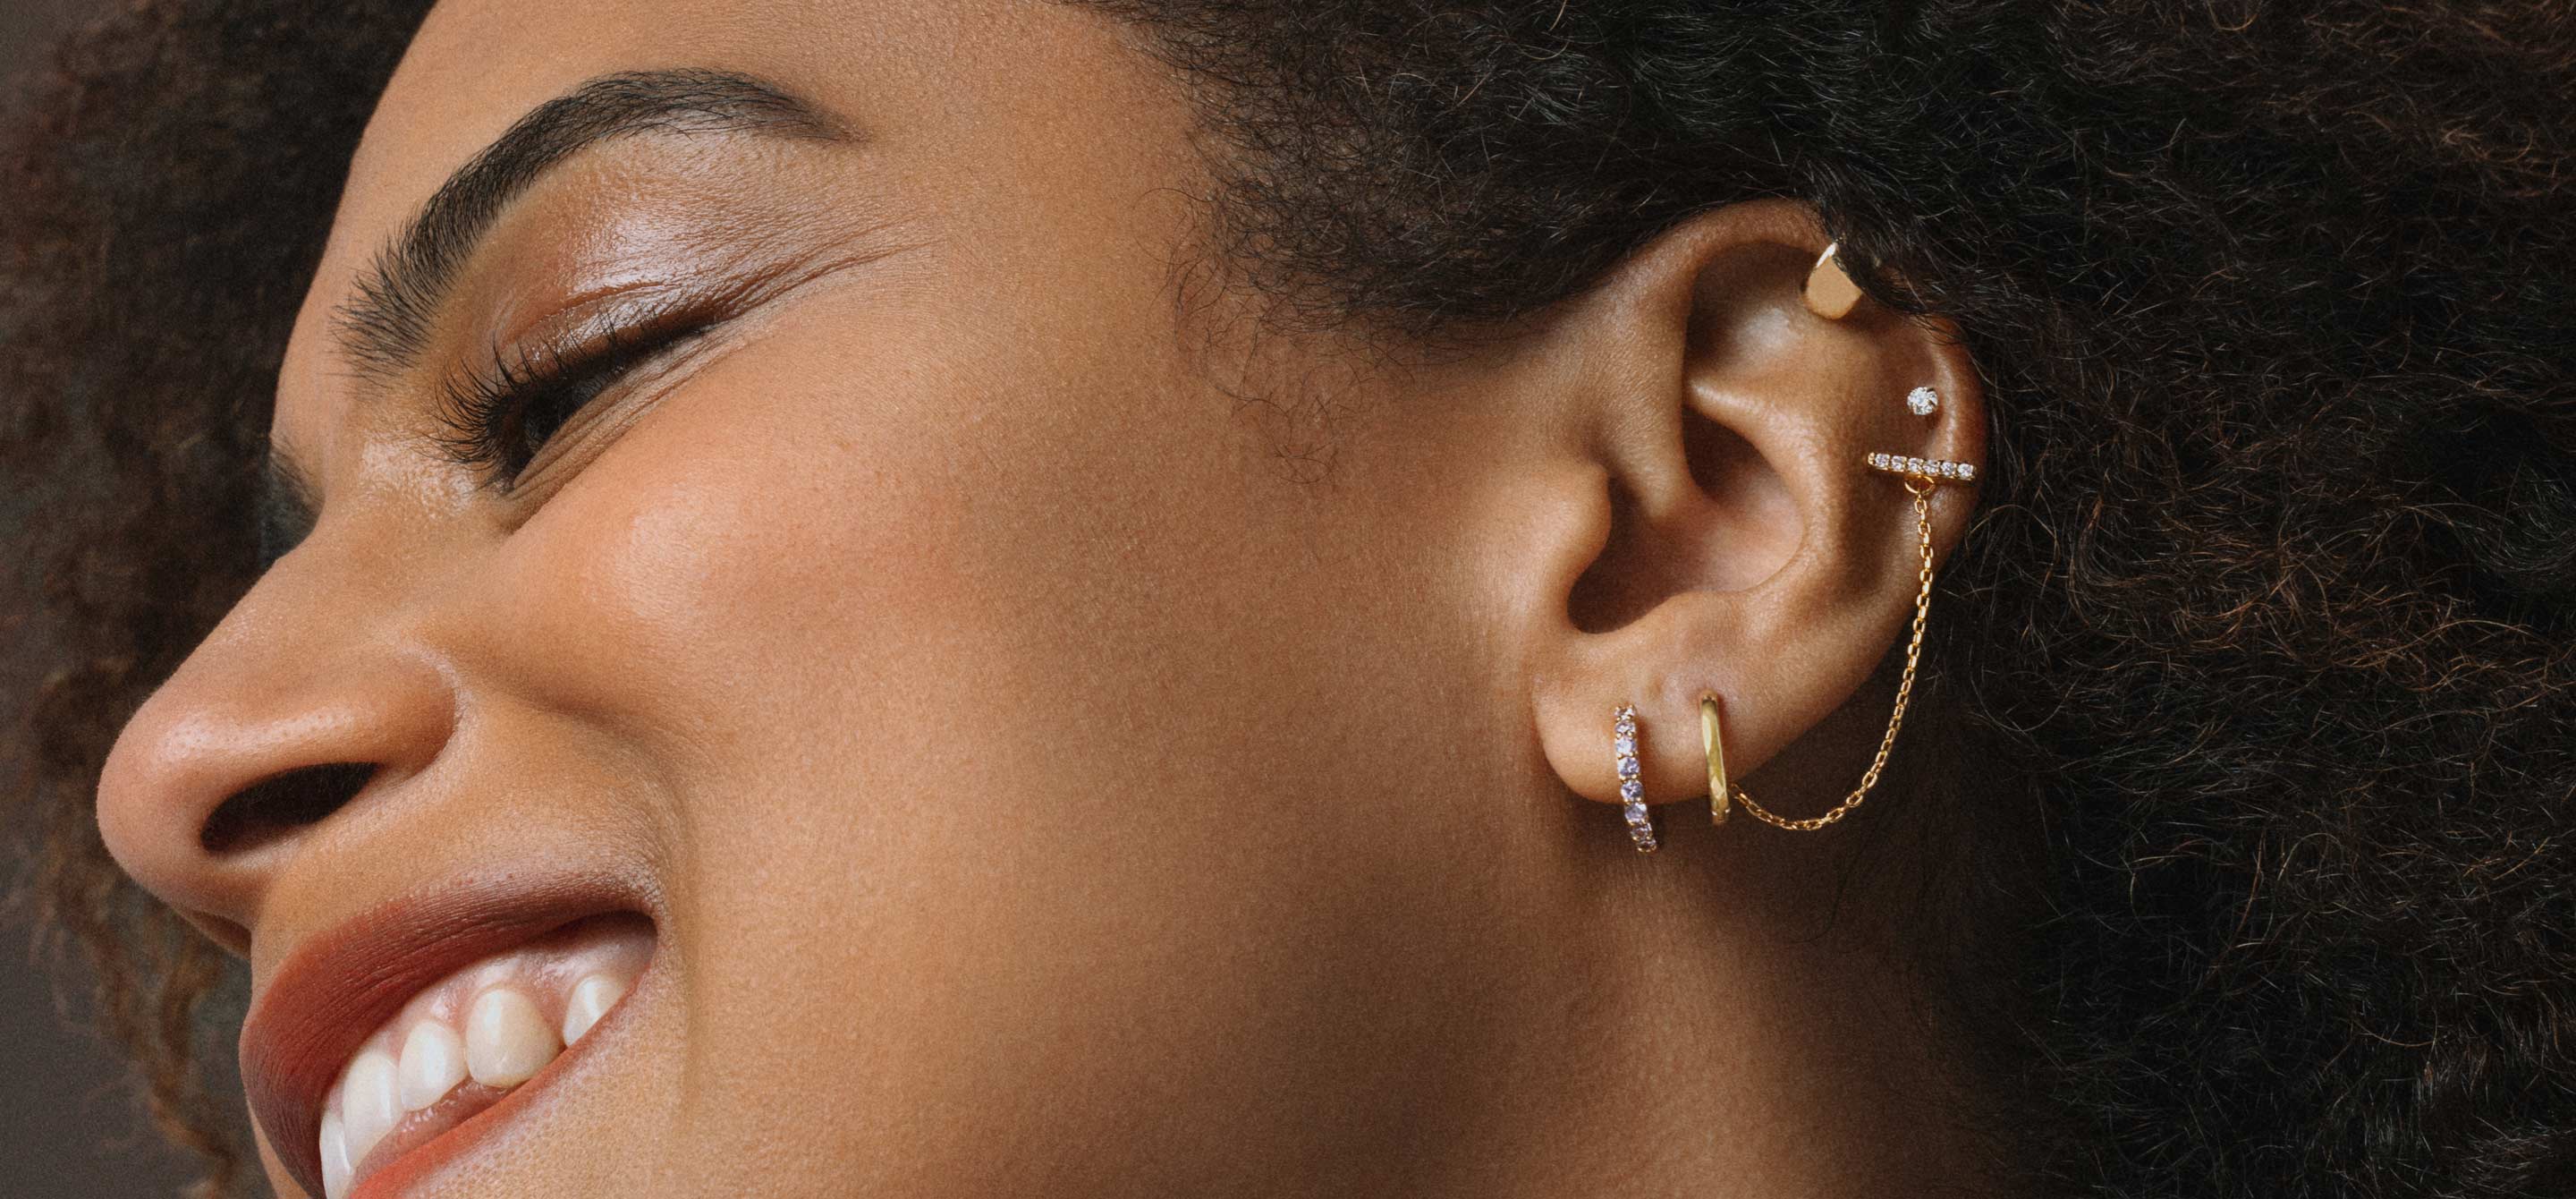 Aggregate more than 232 rhodium earrings allergy